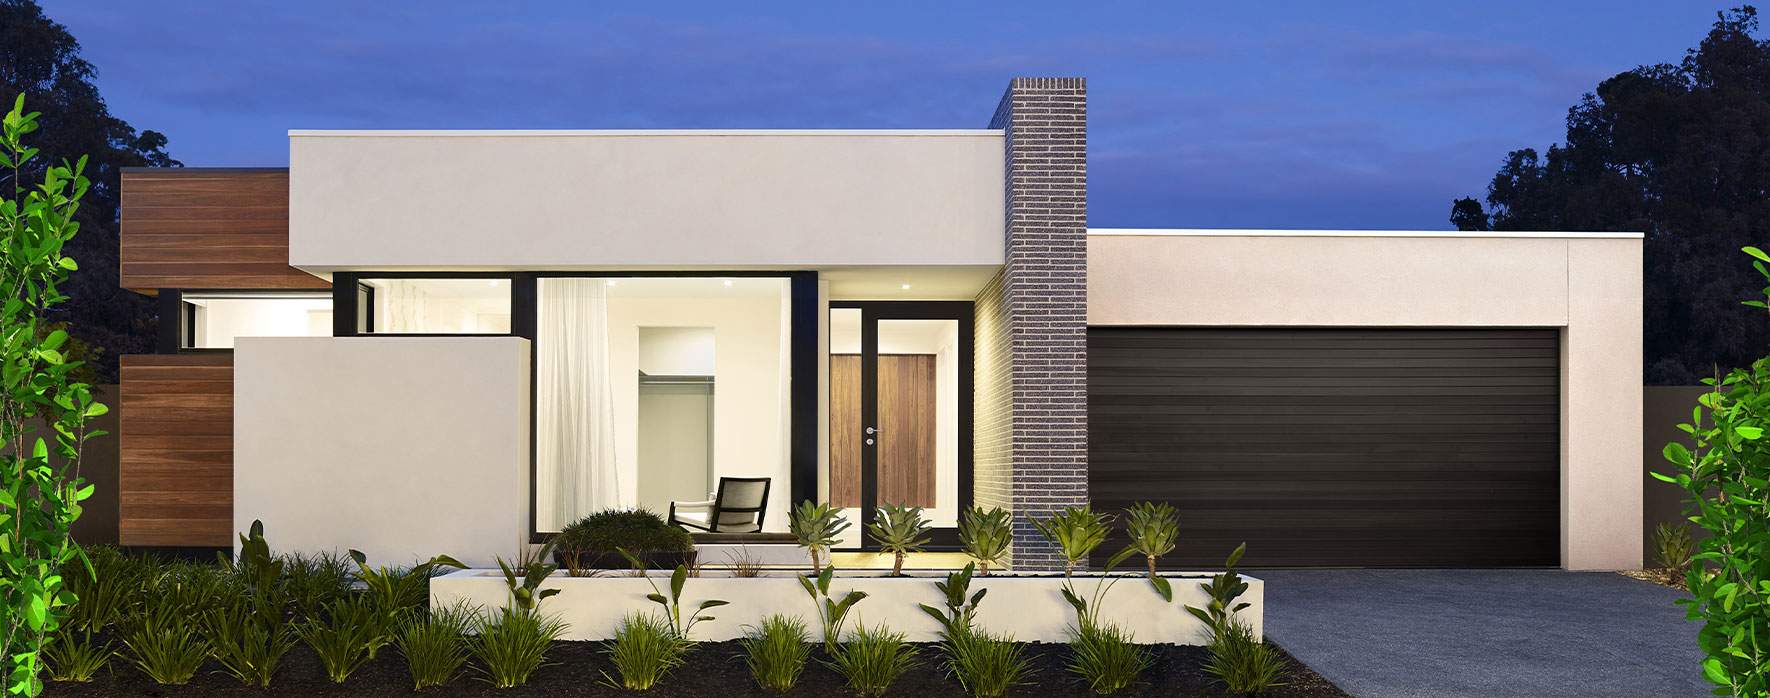 single-storey-house-design-nuevo-facade